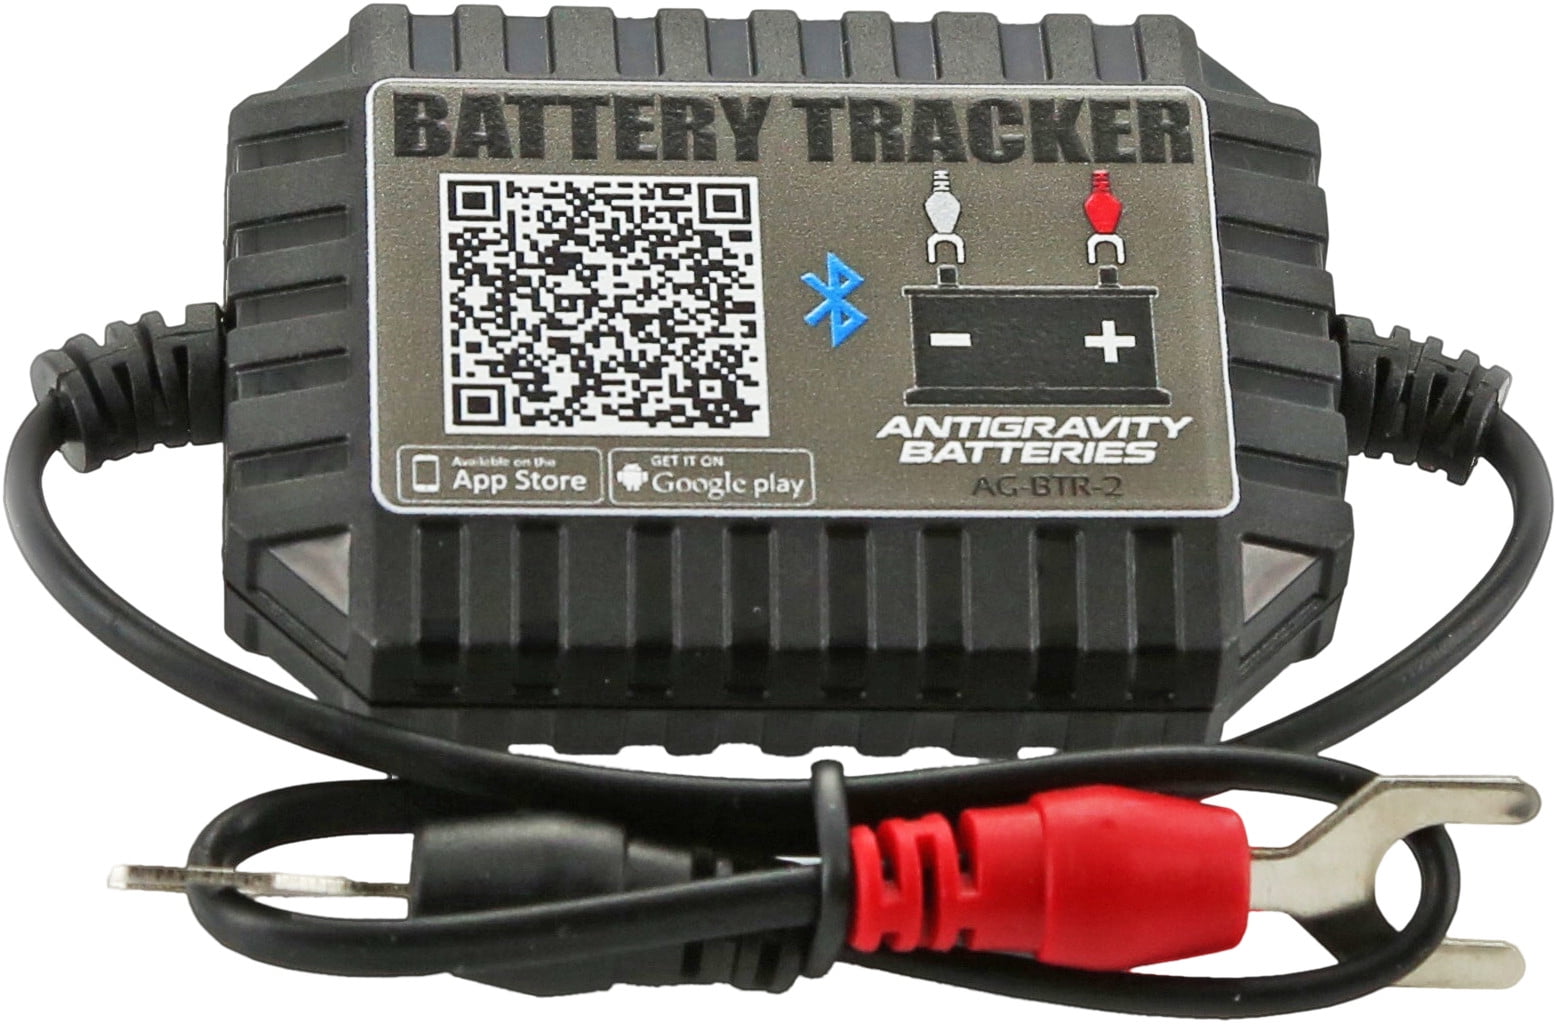 Battery tracker